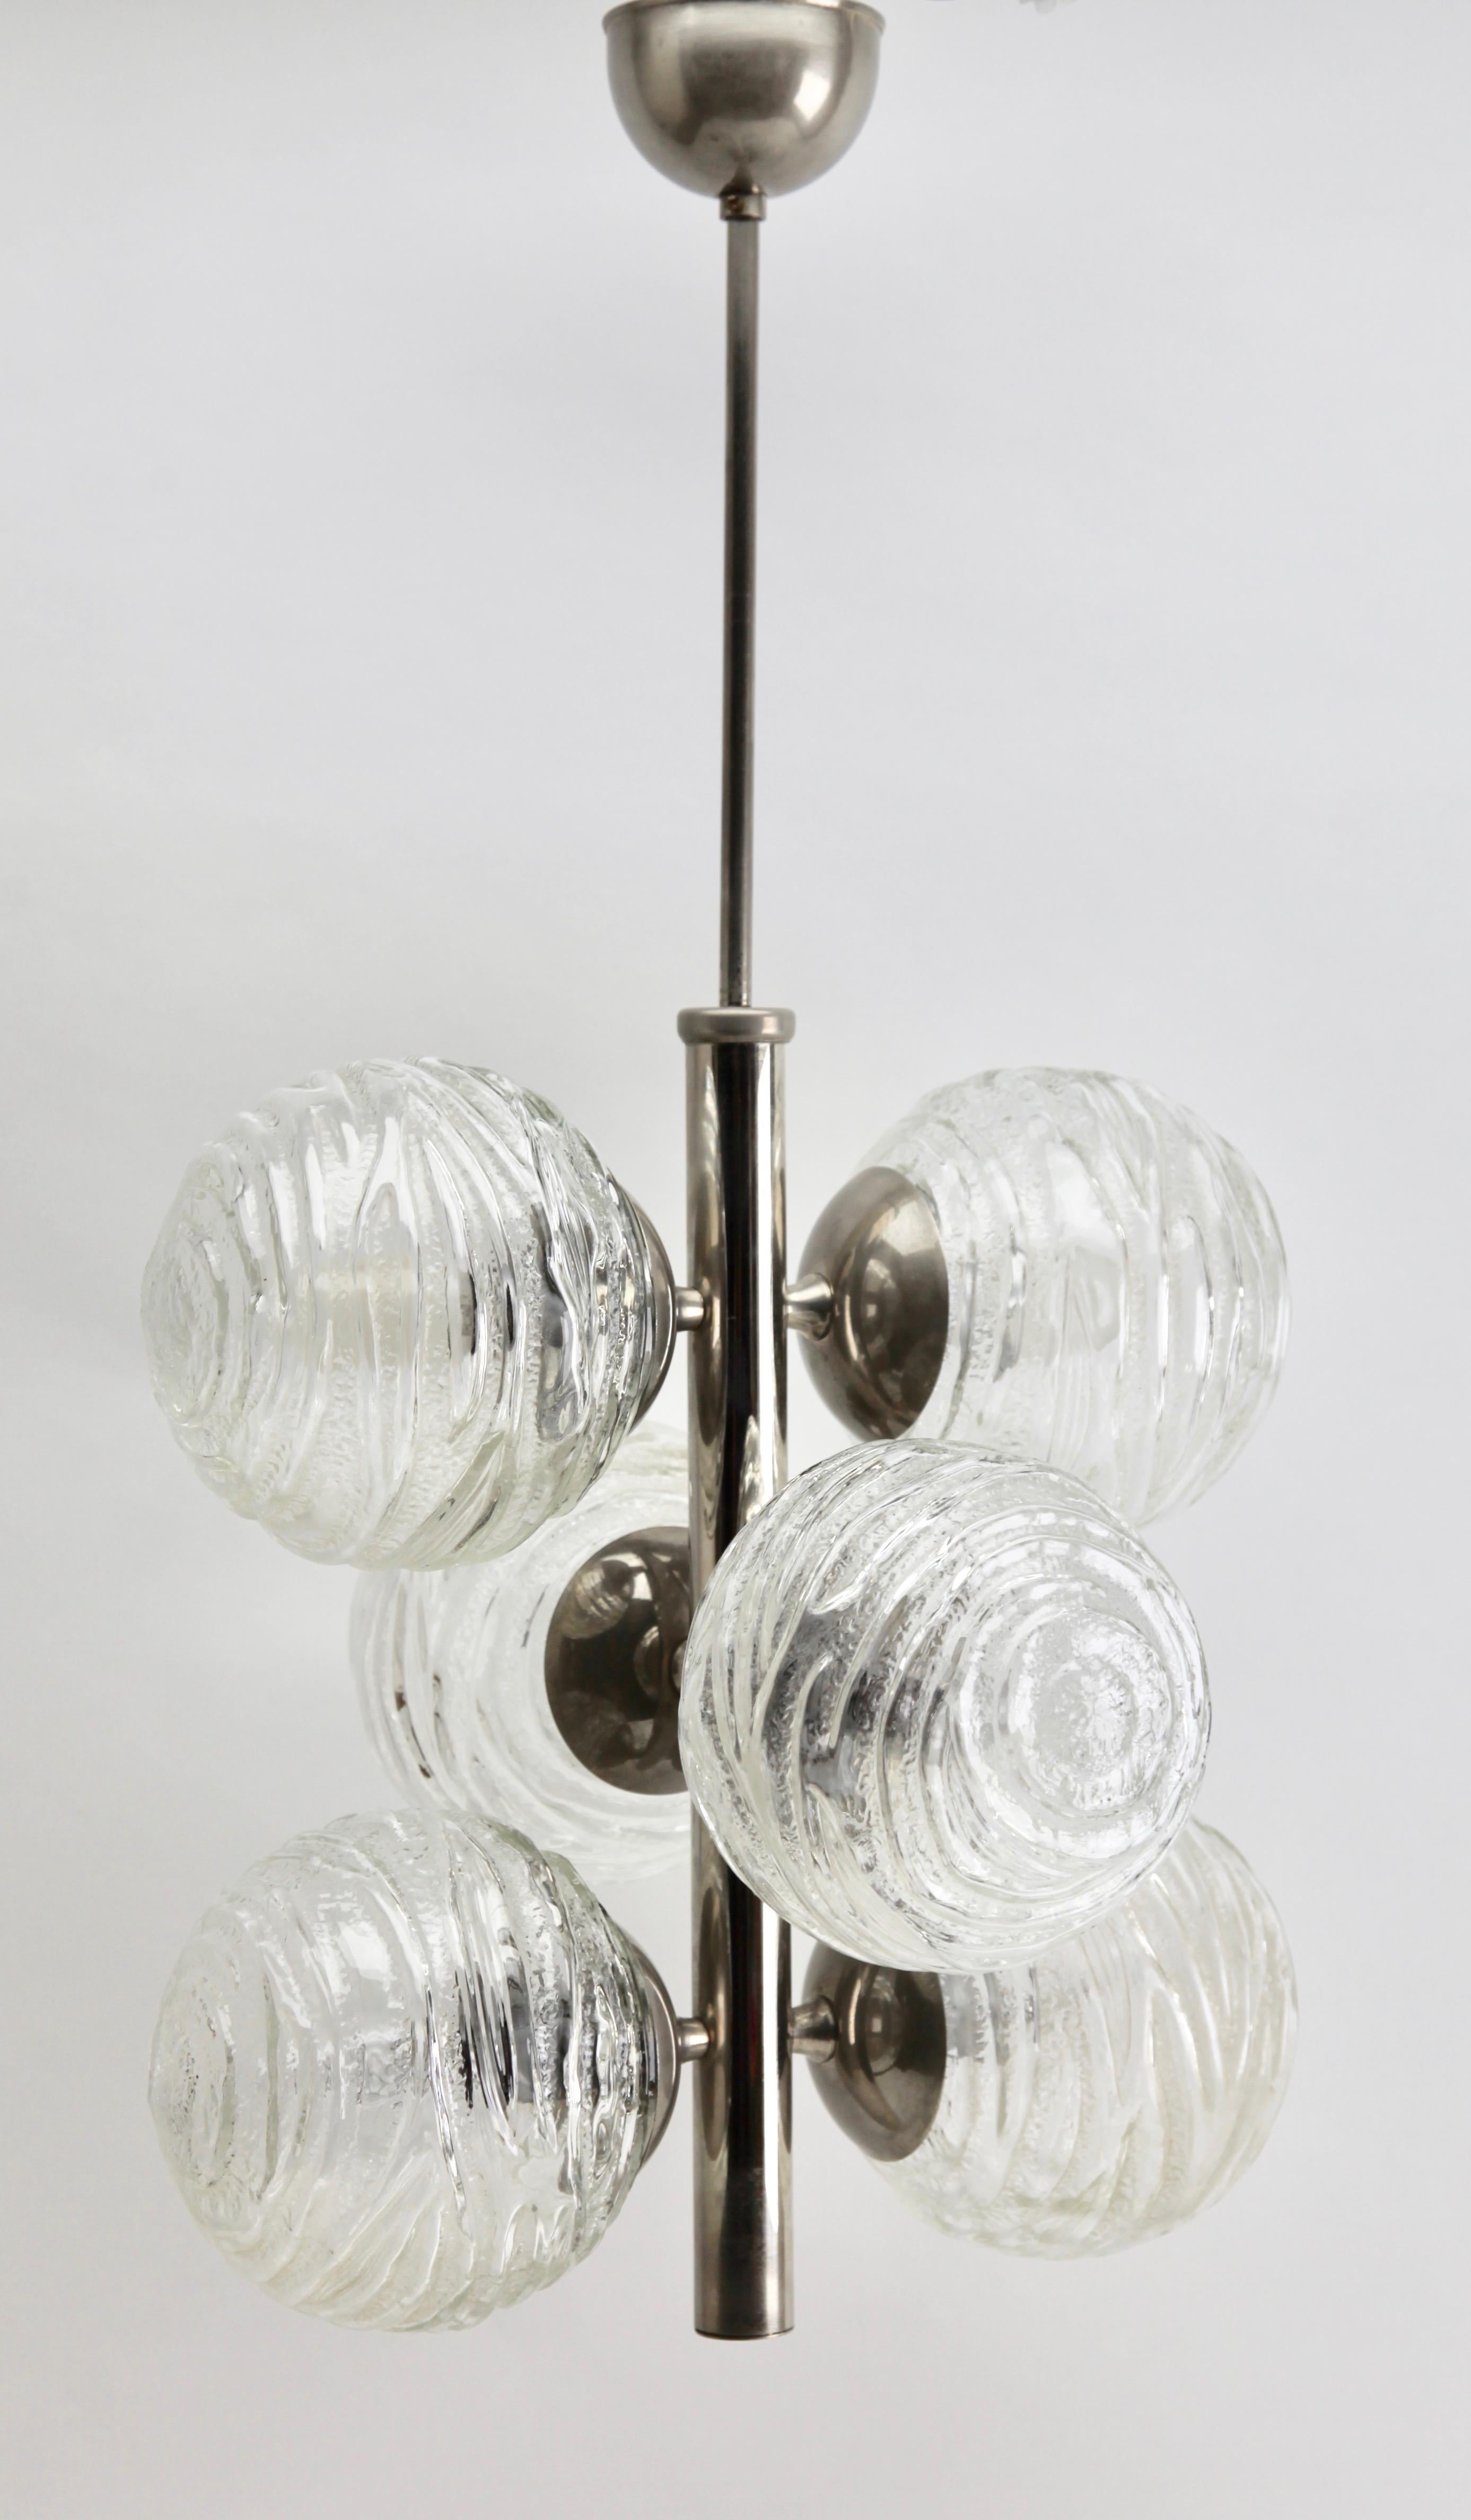 Art Glass Fischer Leuchten ‘Germany’ Swirl Ball Pendant Stem Lamp with 6 Globular Lights For Sale